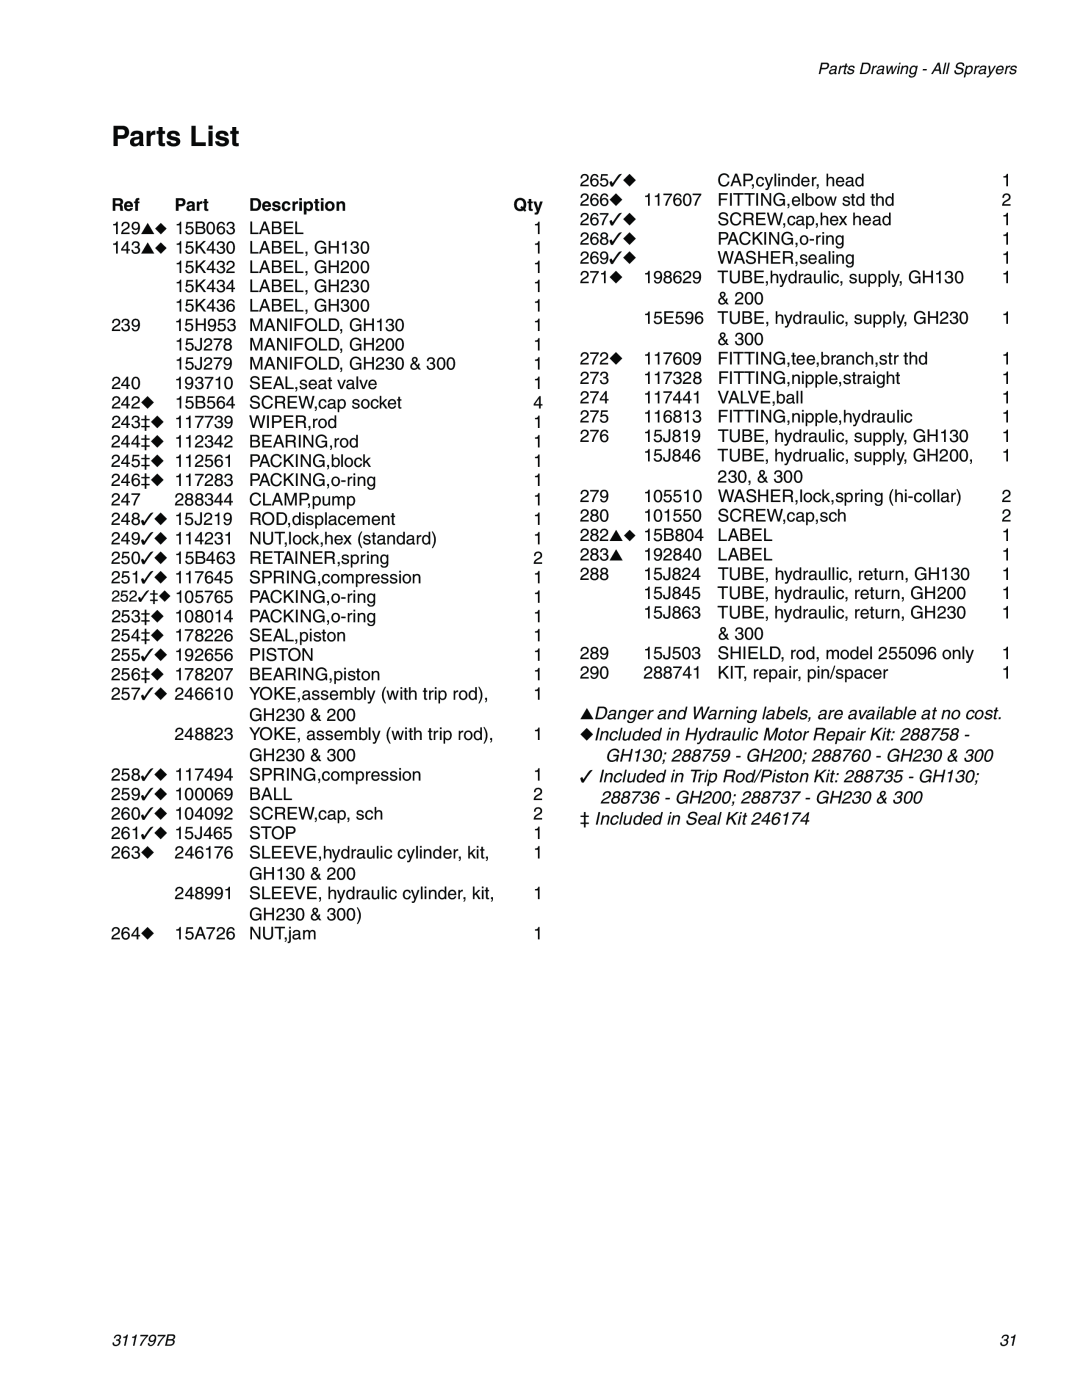 Uniden GH 300, GH 230, GH 200, GH 130 Parts List, GH130 288759 - GH200 288760 - GH230, ‡ Included in Seal Kit, Description 